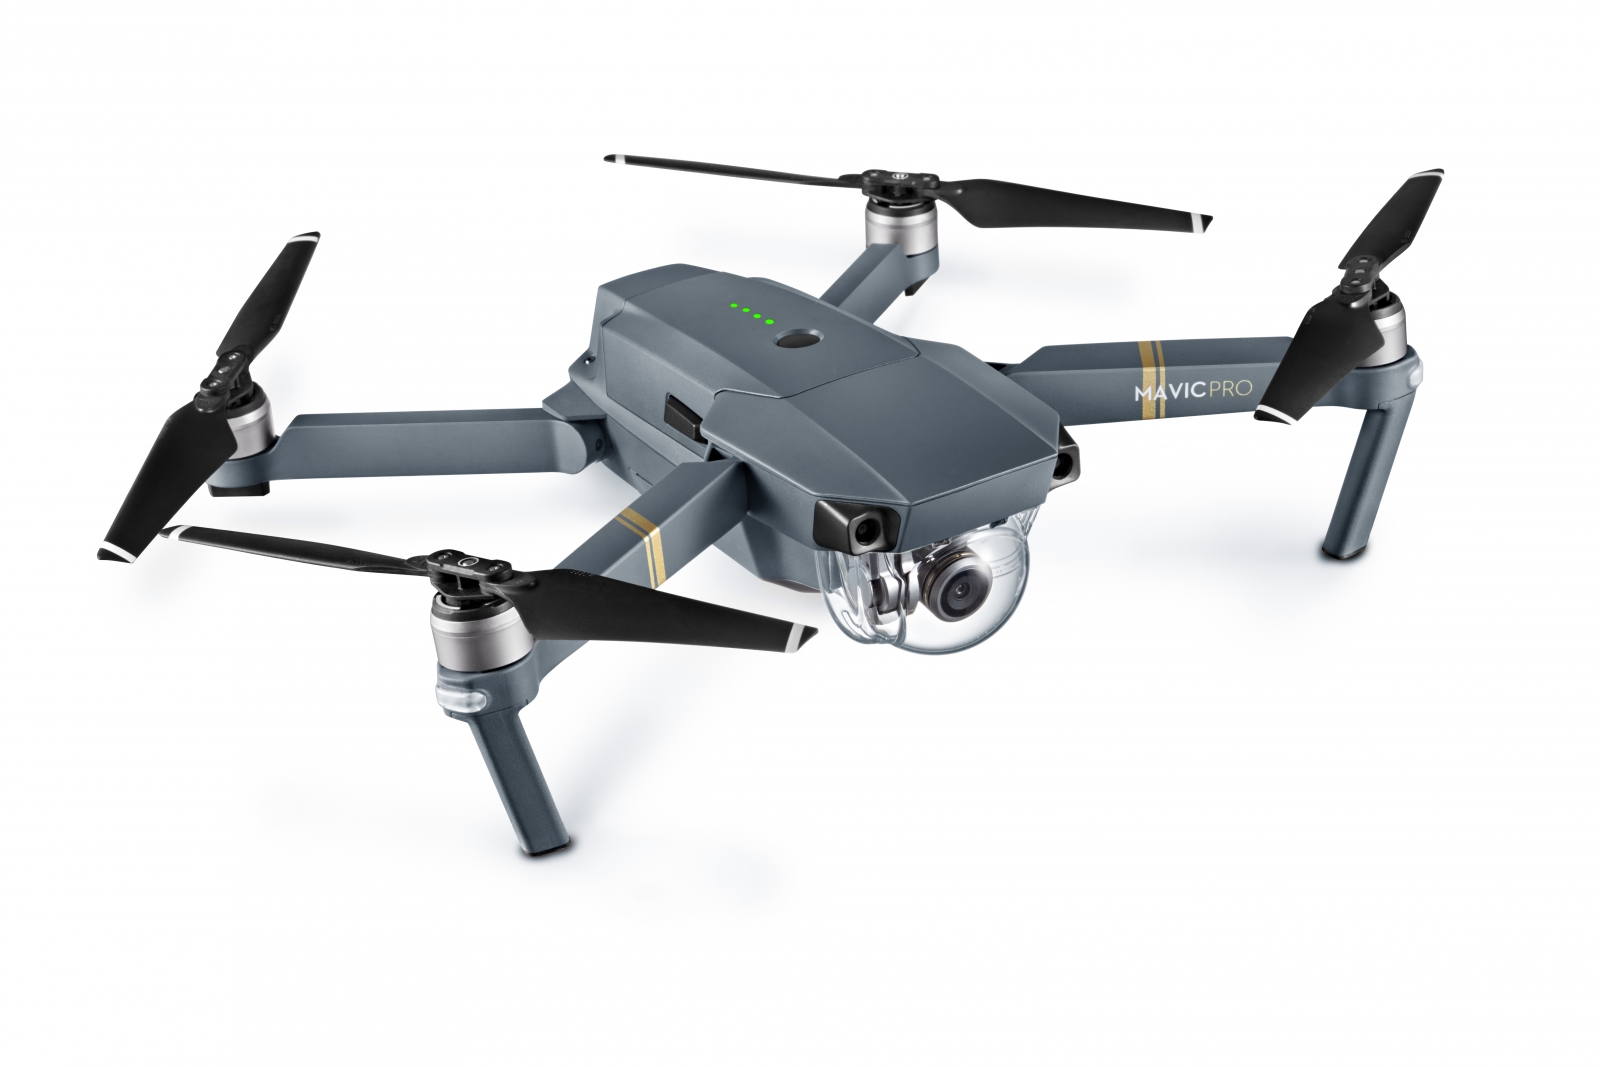 DJI's Mavic Pro foldable selfie drone